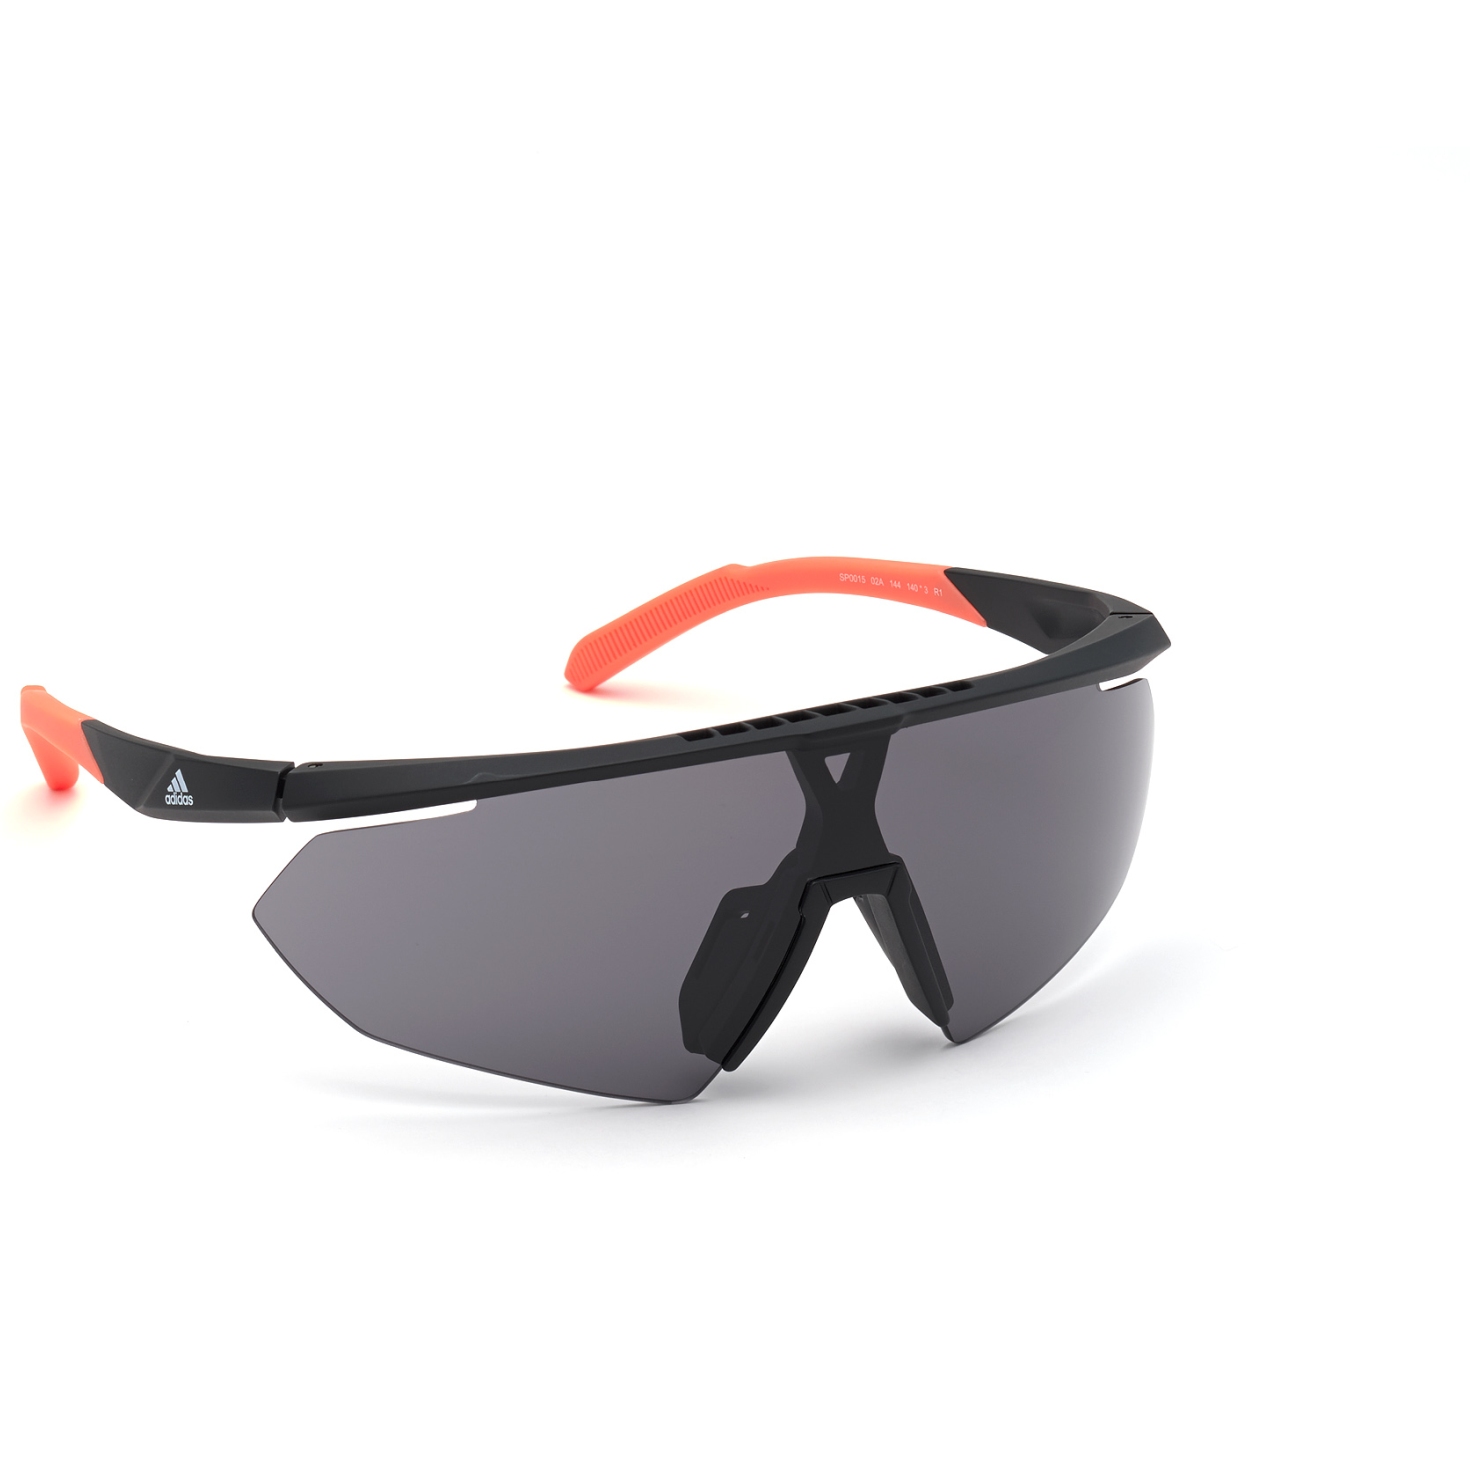 Picture of adidas Sp0015 Injected Sports Sunglasses - Matte Black / Contrast Black + Orange